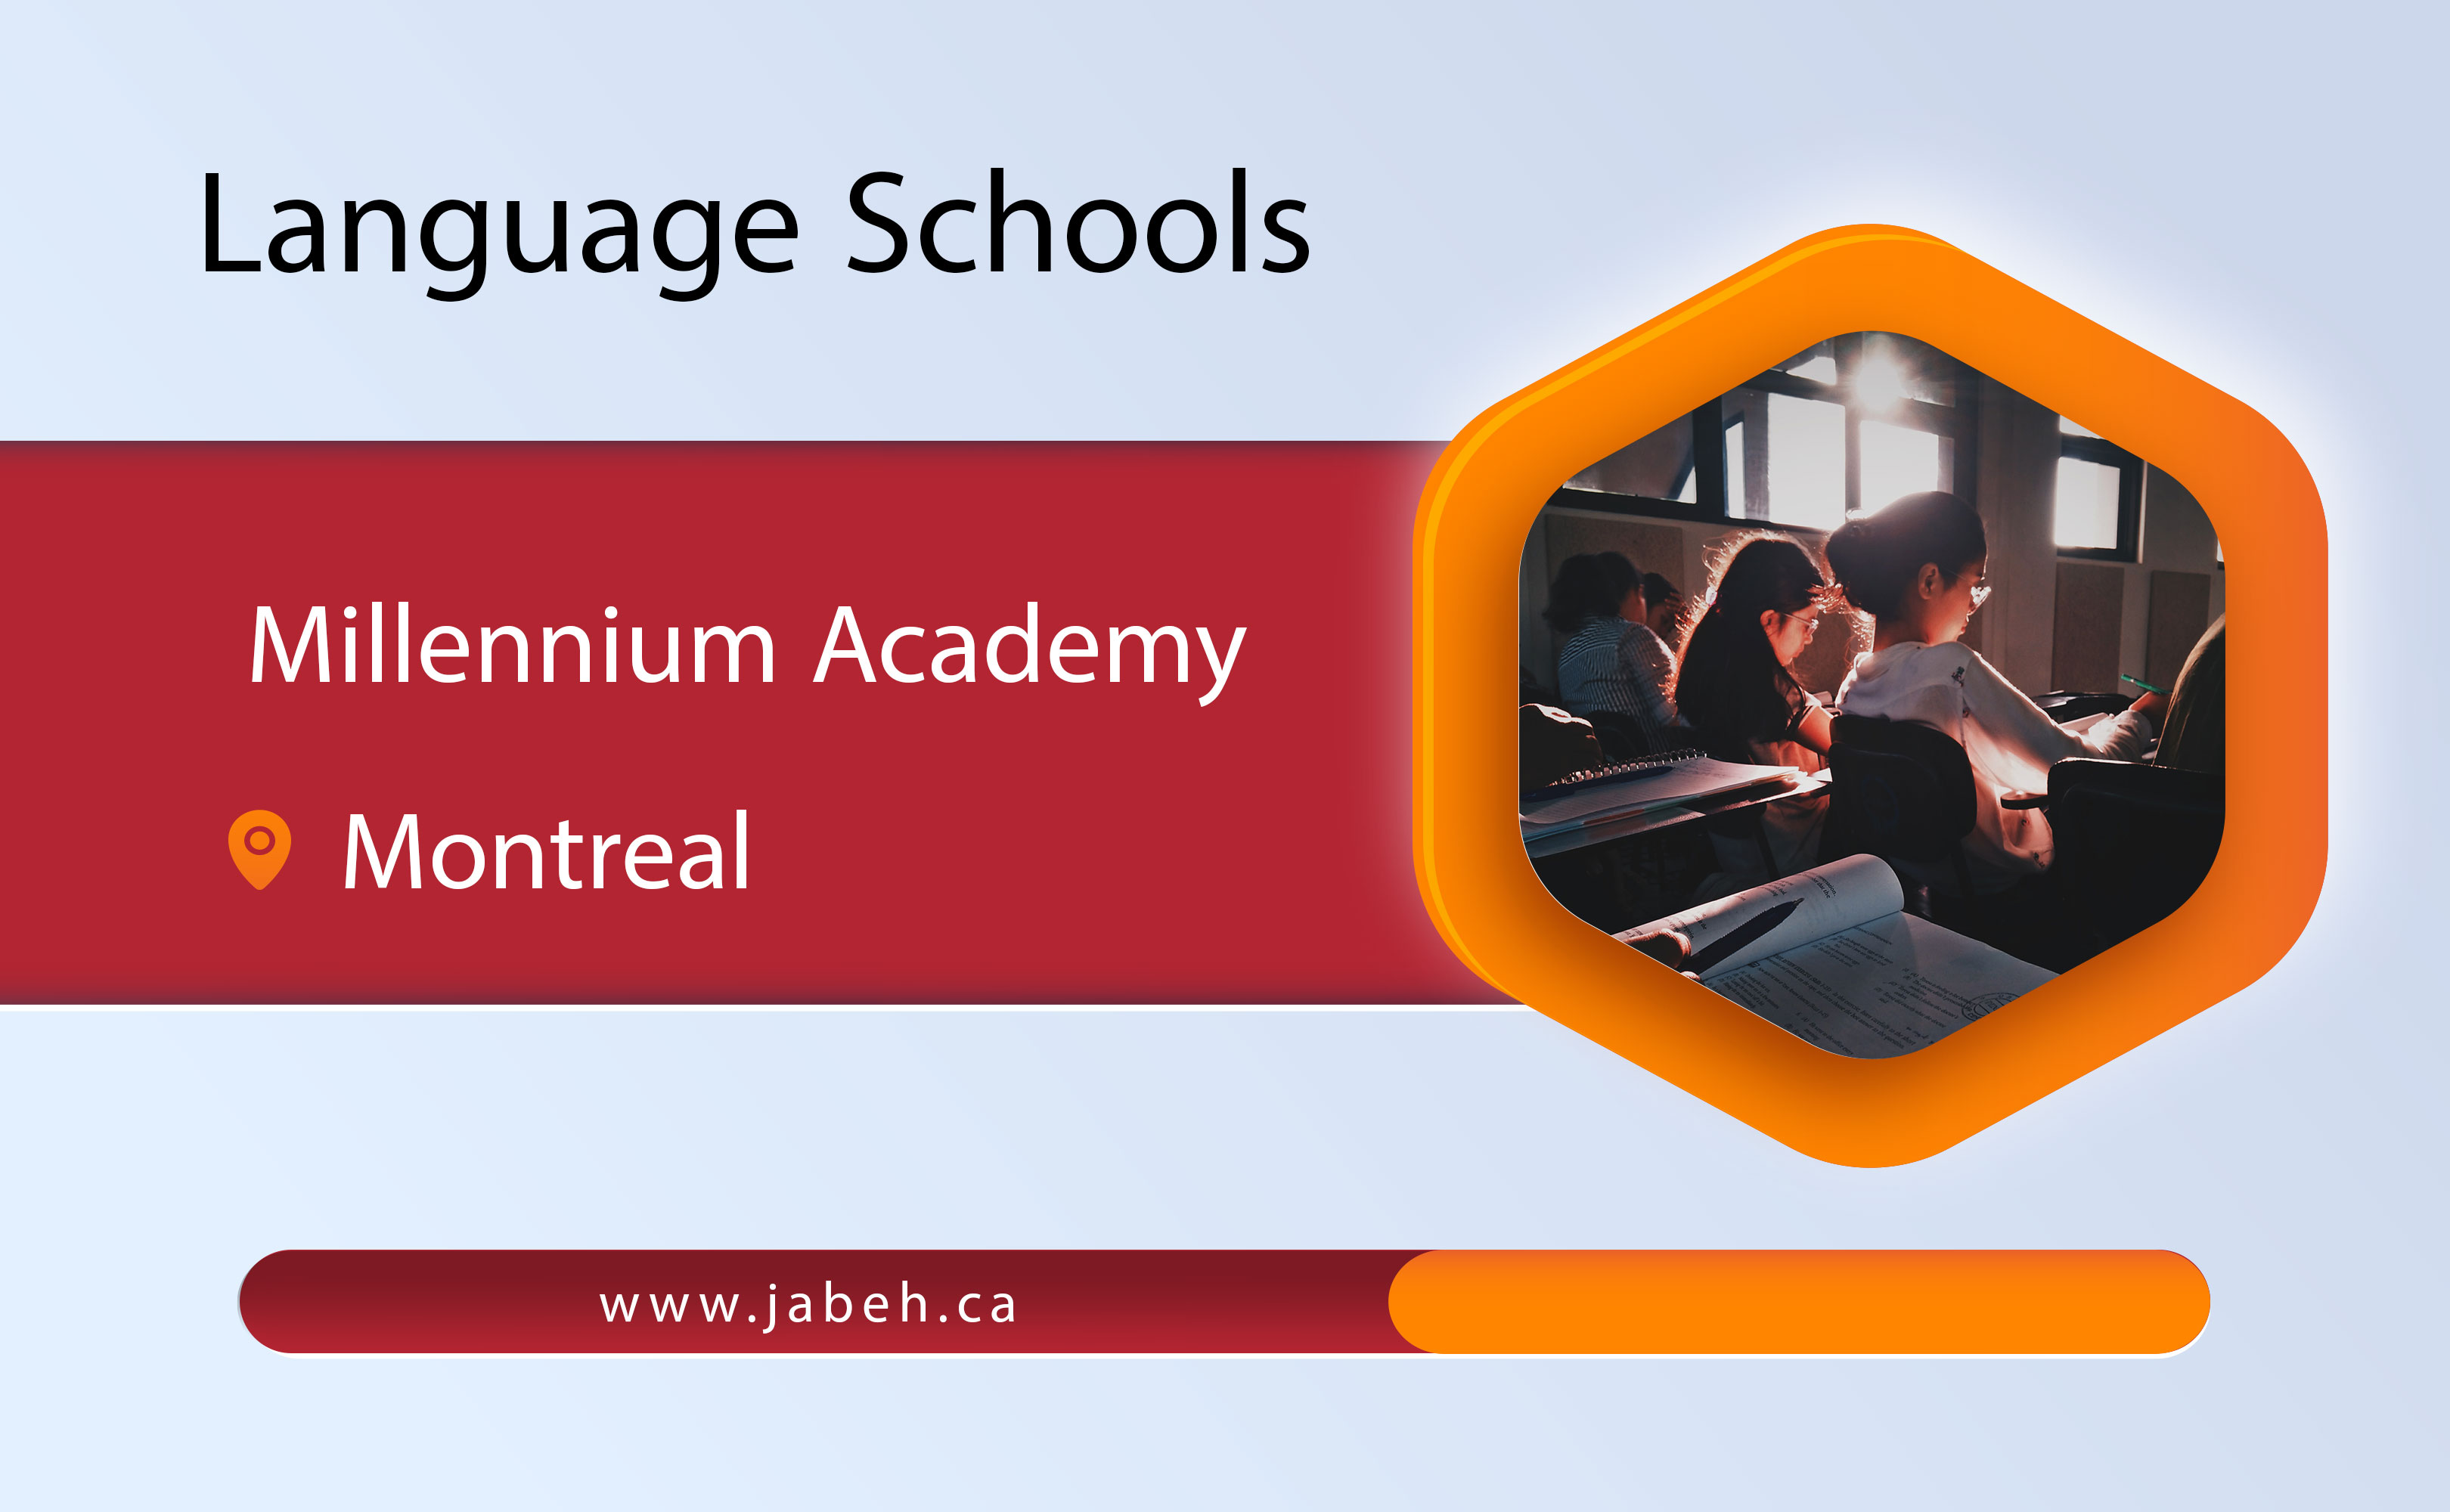 Millennium Academy Language School in Montreal